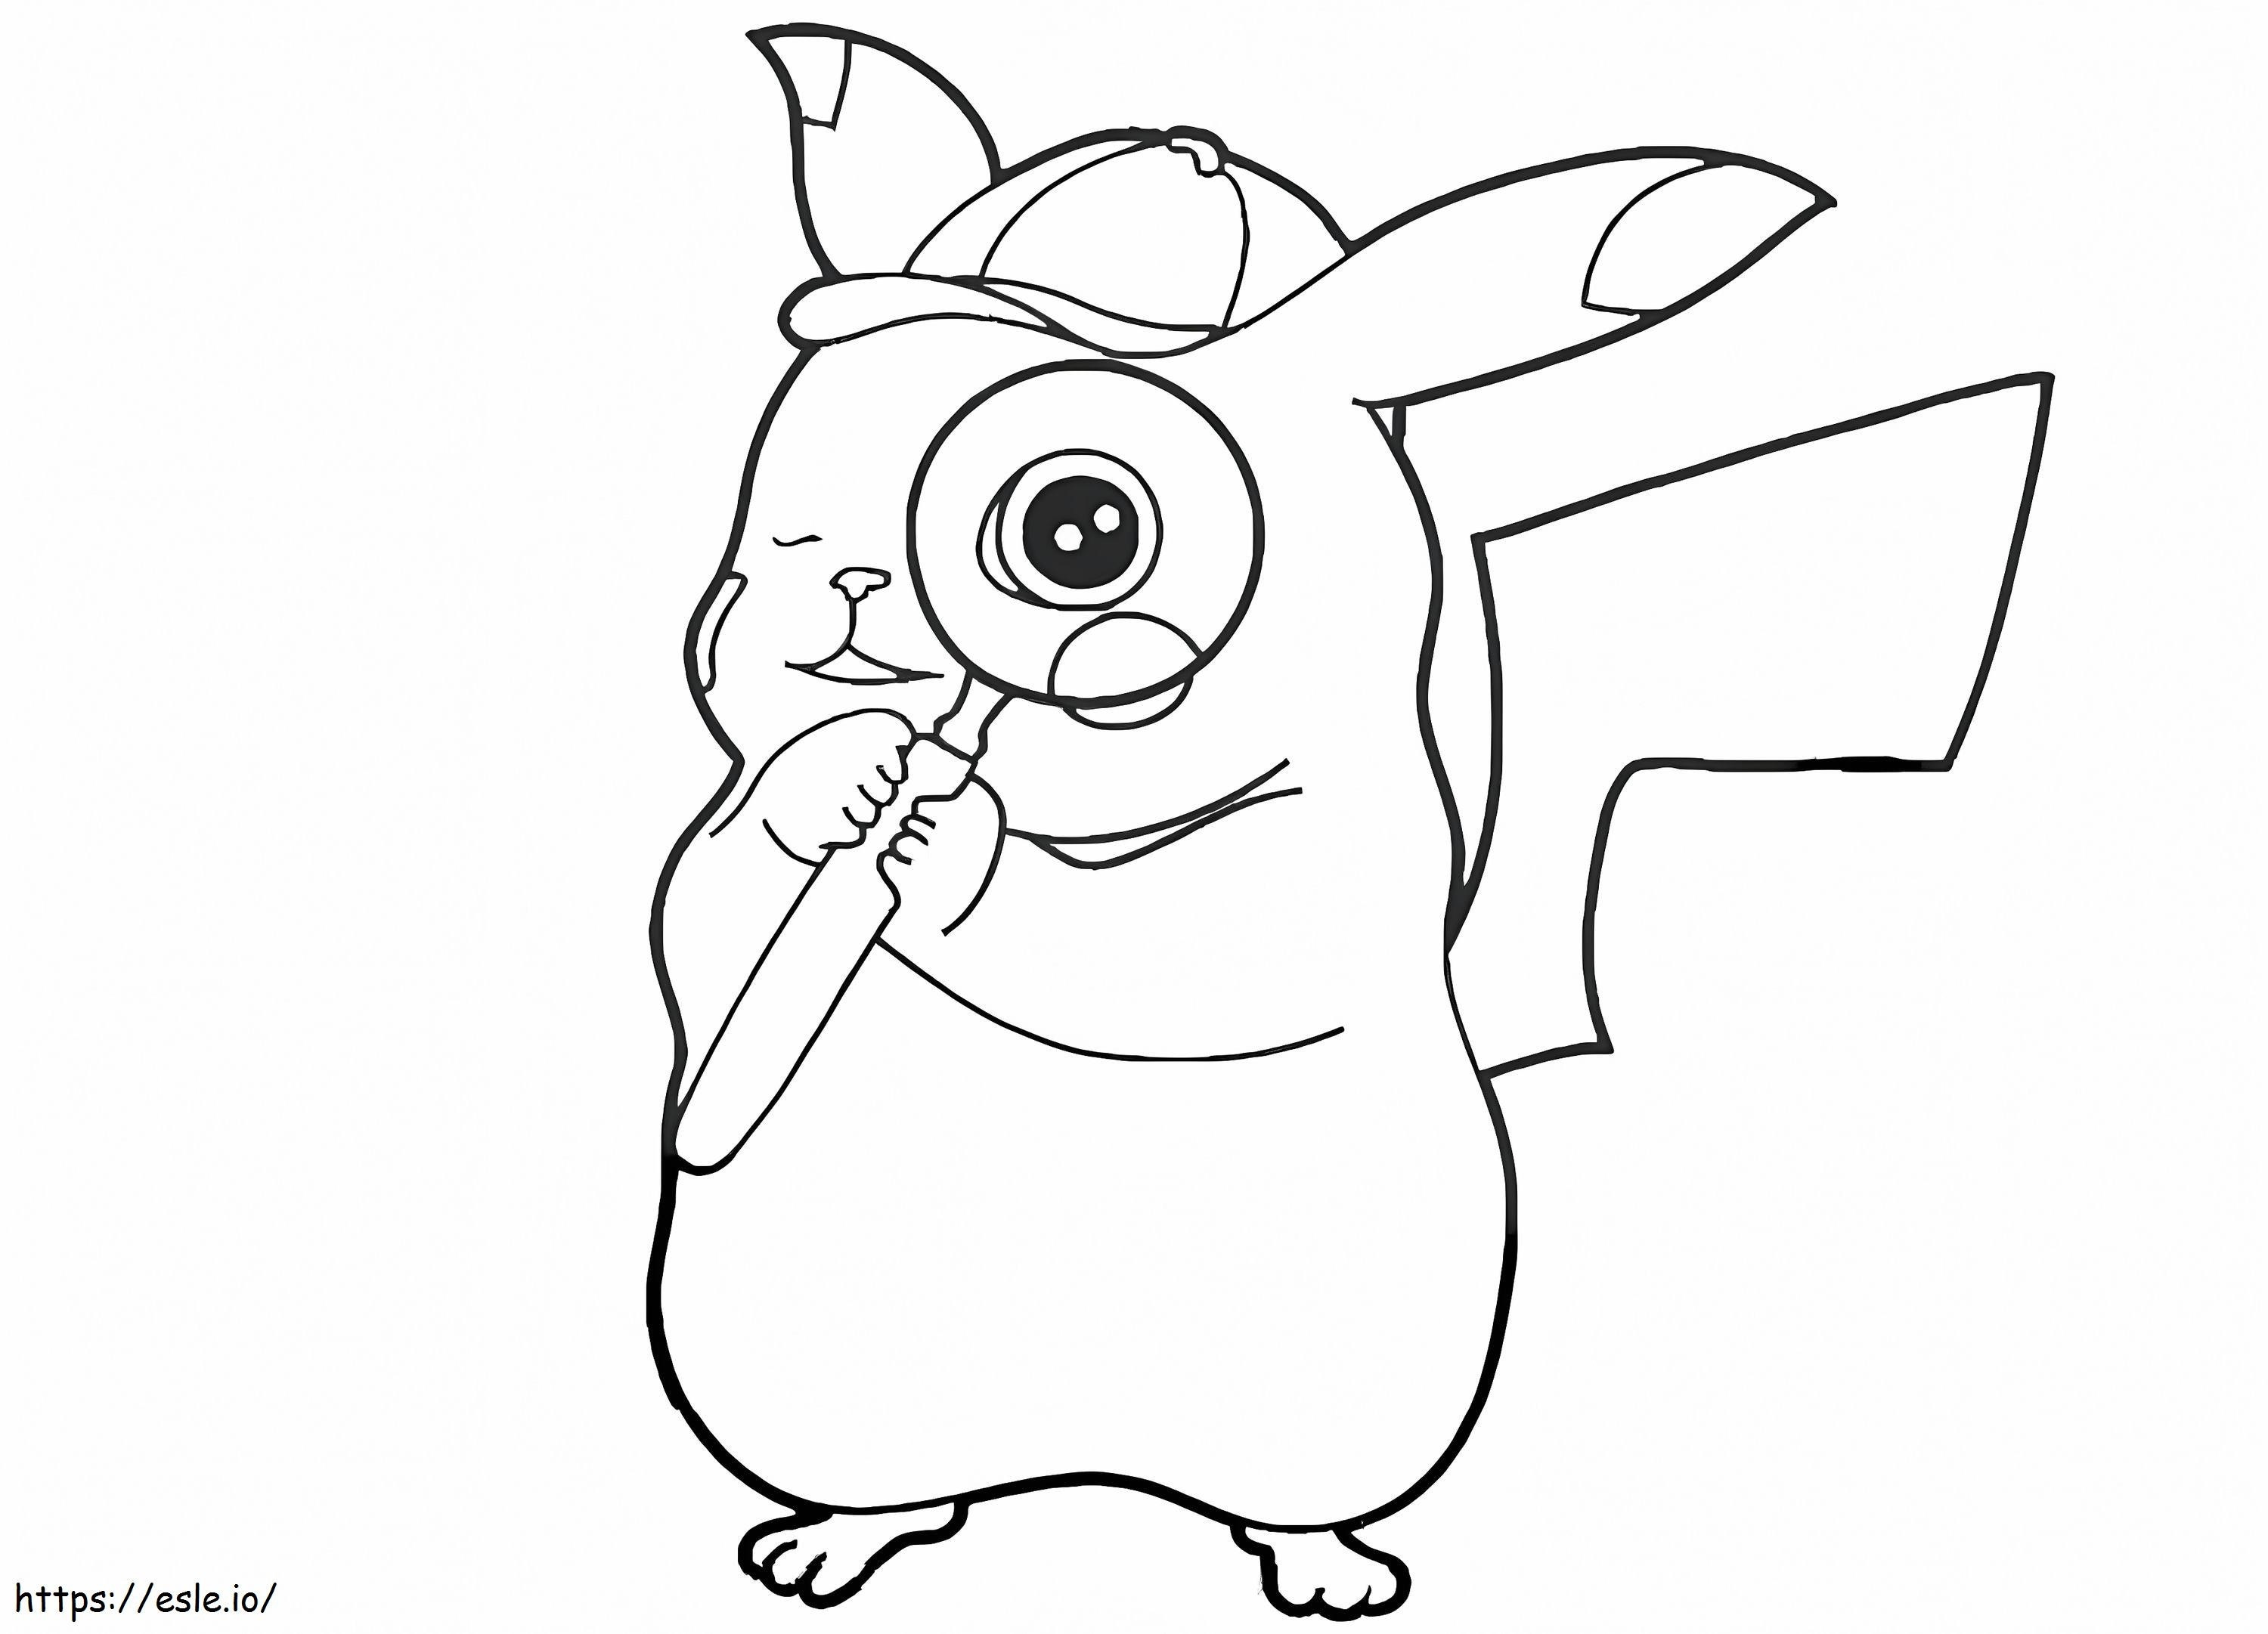 Detectivul Lindo Pikachu de colorat